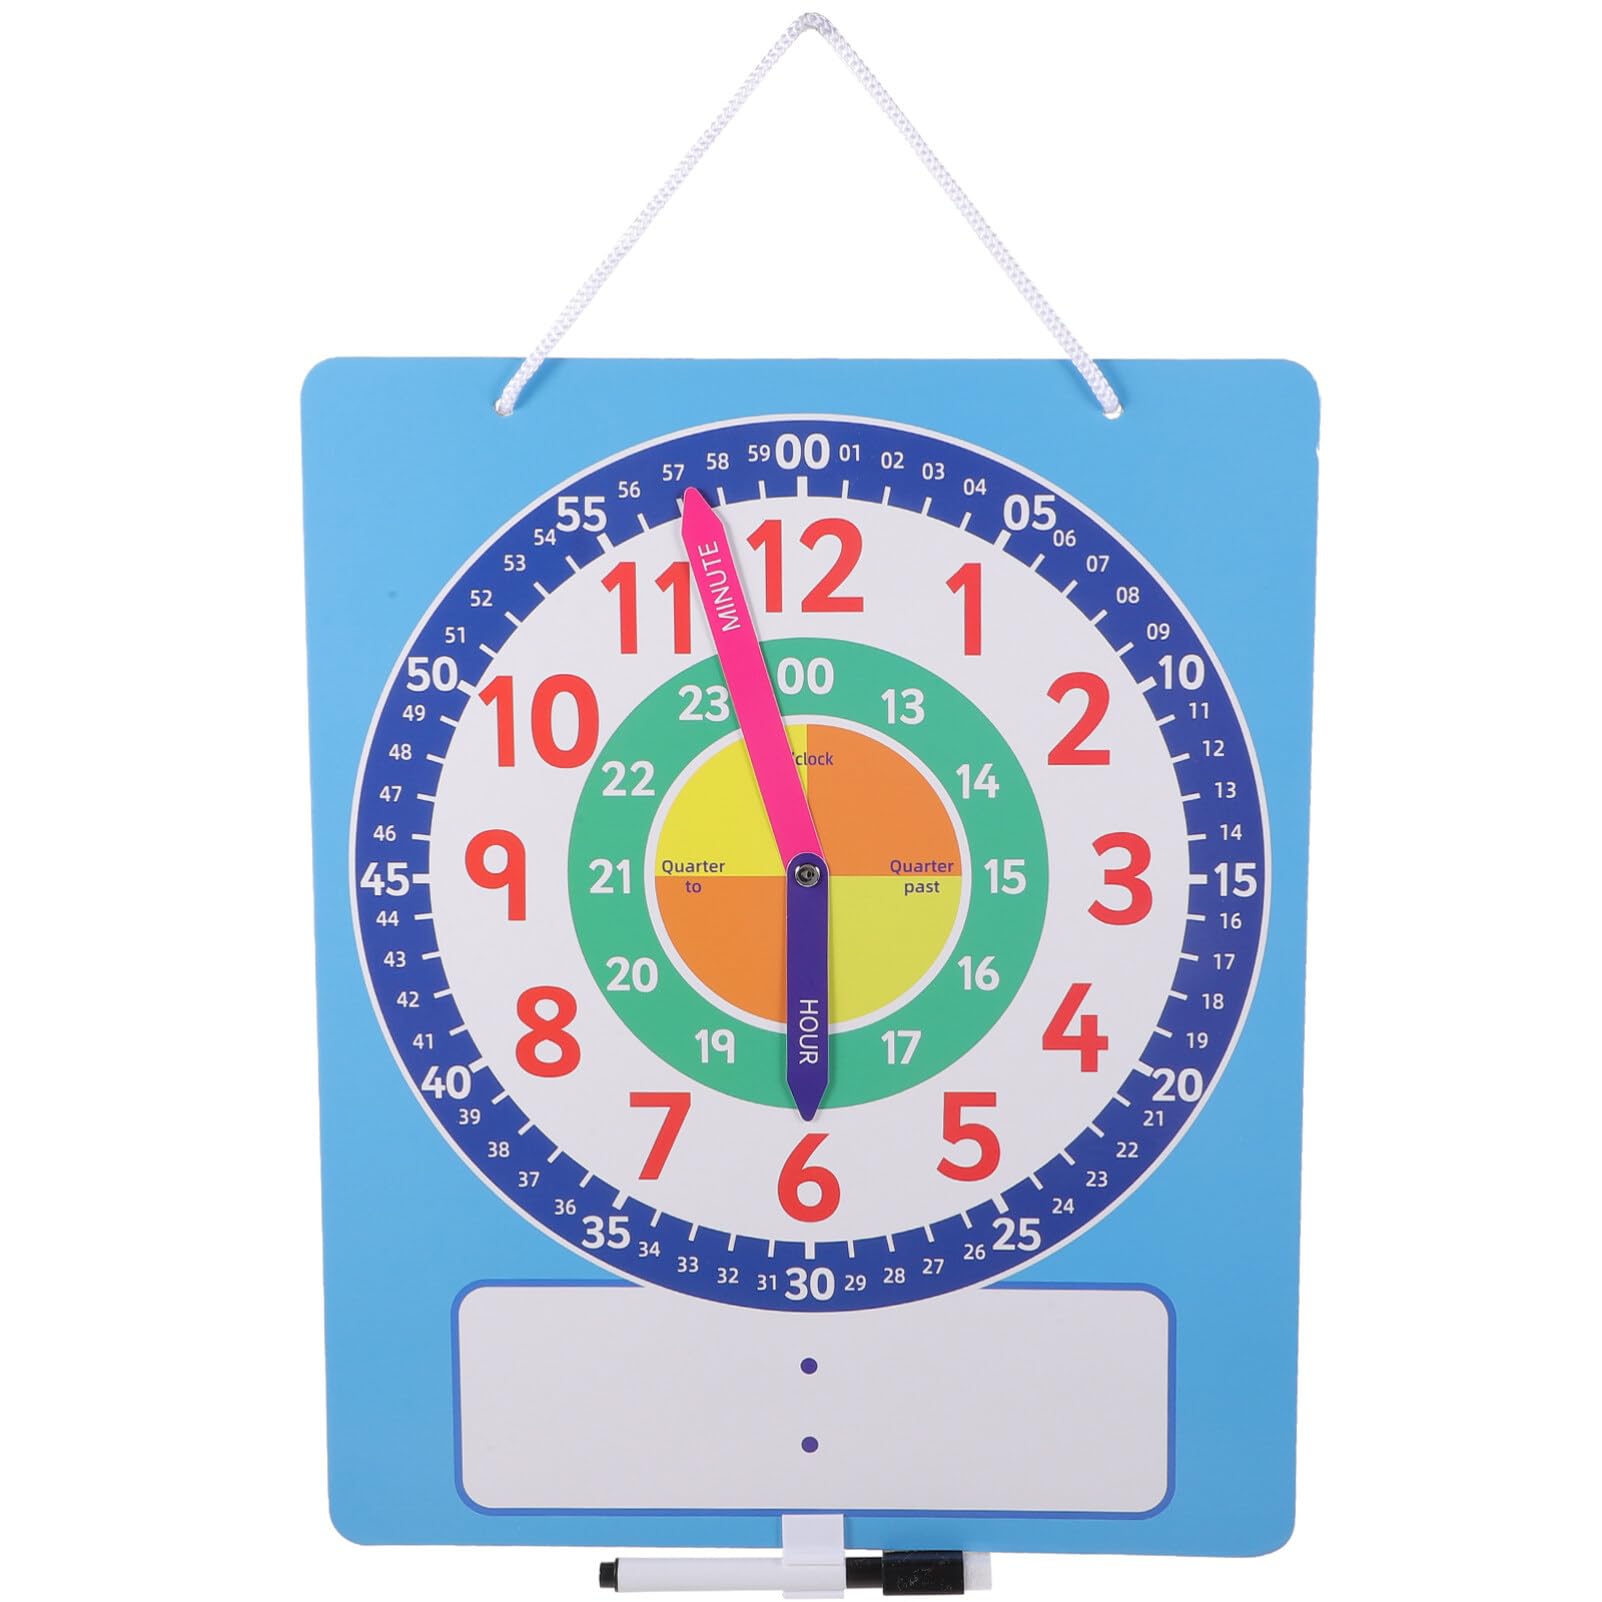 SEWACC 1 セット 時間 教育 補助具 磁気 時計 子供用 おもちゃ 知育 おもちゃ 時計 学習用 教室 学習 時計 練習 時計 実用用 時計